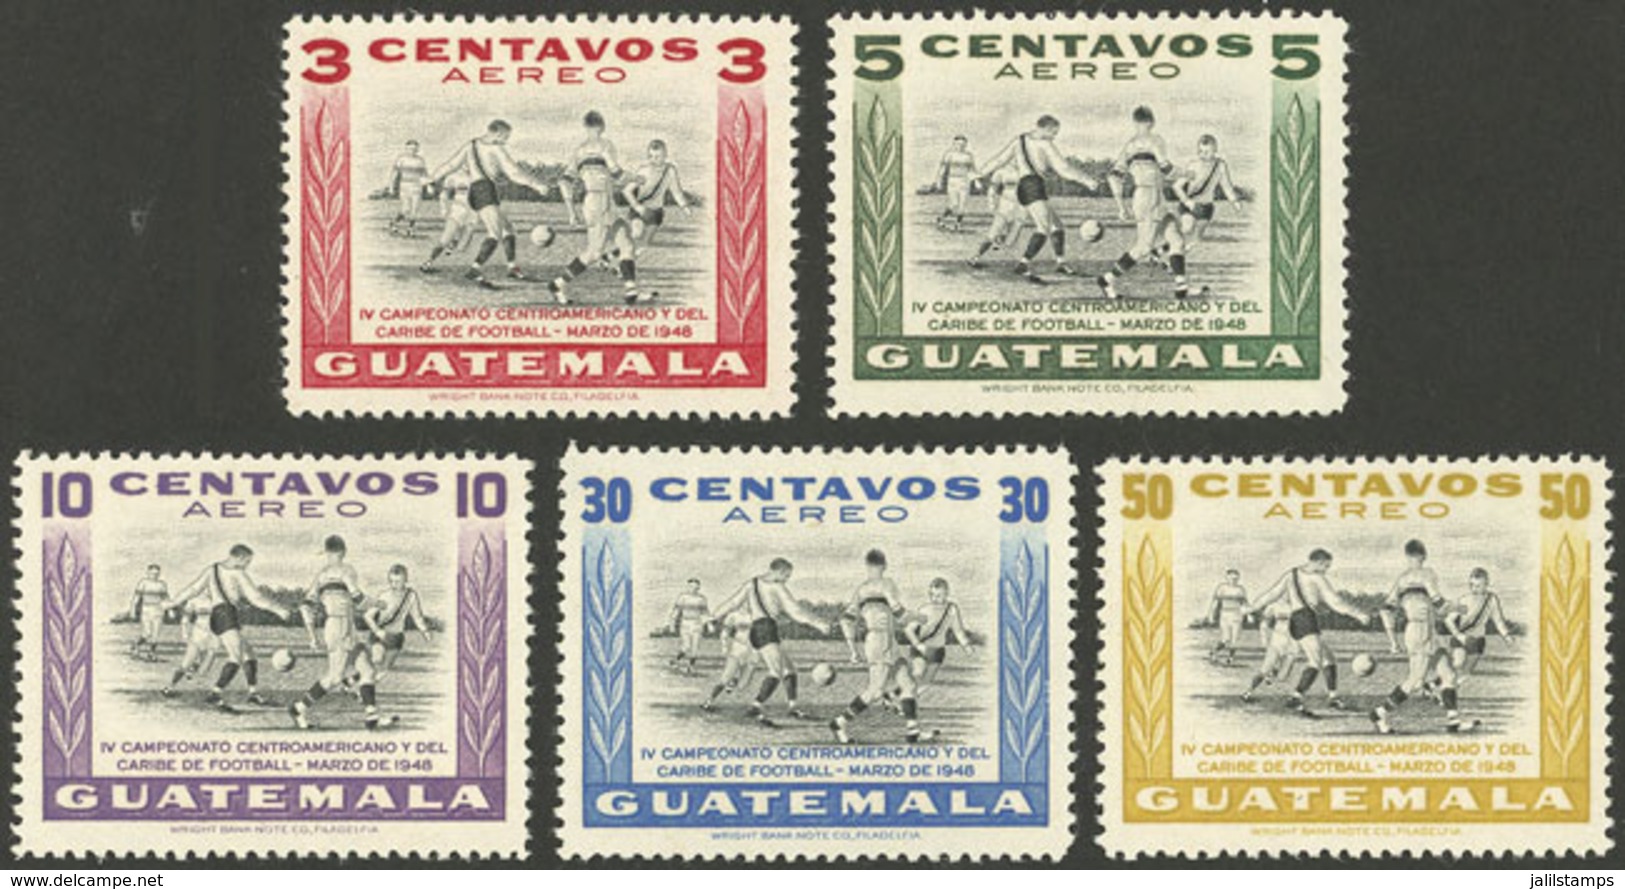 GUATEMALA: Yvert 160/164, 1940 Football, Cmpl. Set Of 5 Values, Mint With Tiny Hinge Mark, Excellent Quality! - Guatemala